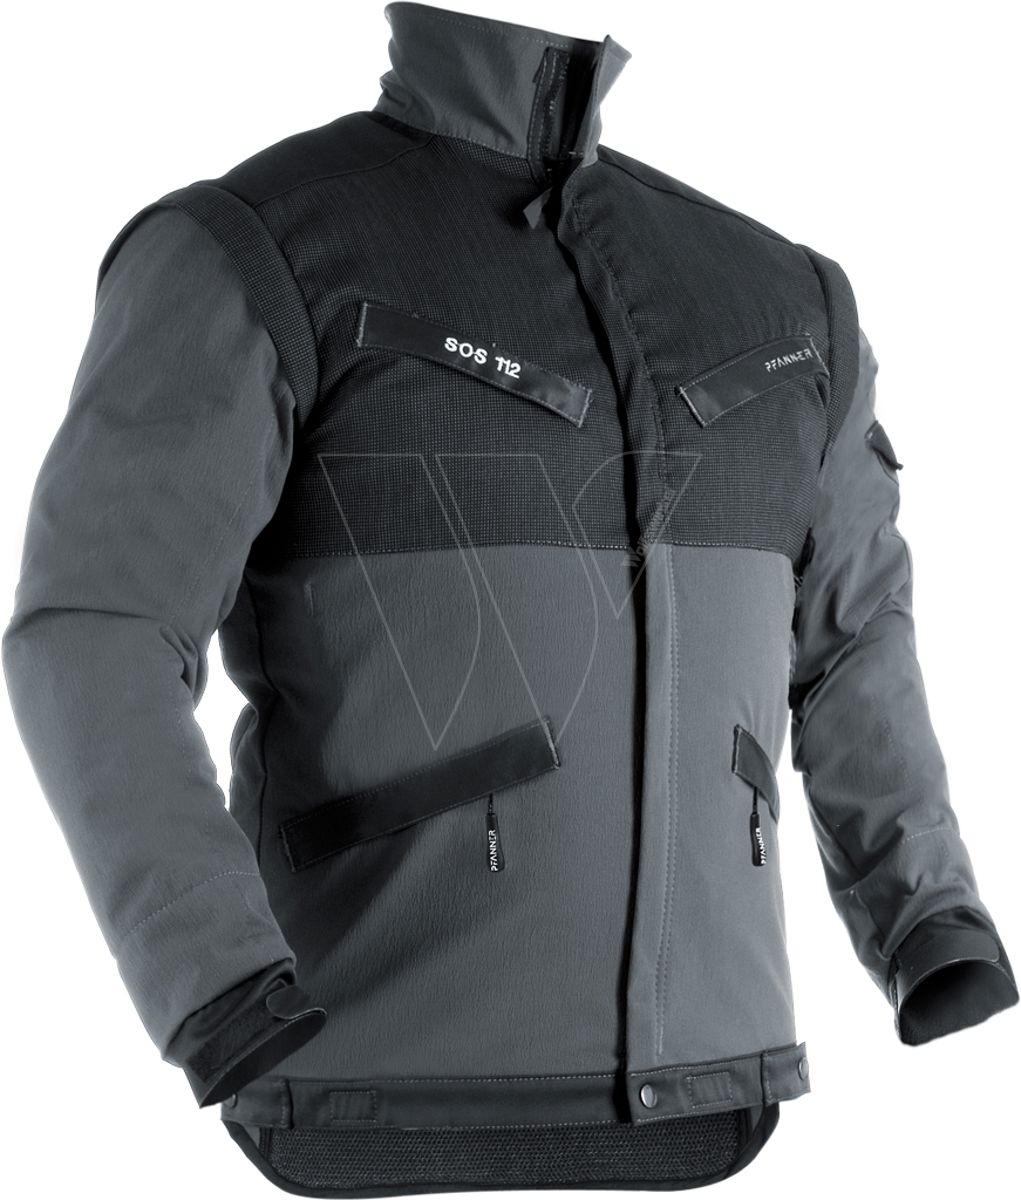 Pfanner klimaair® reflex jacket grau xxl